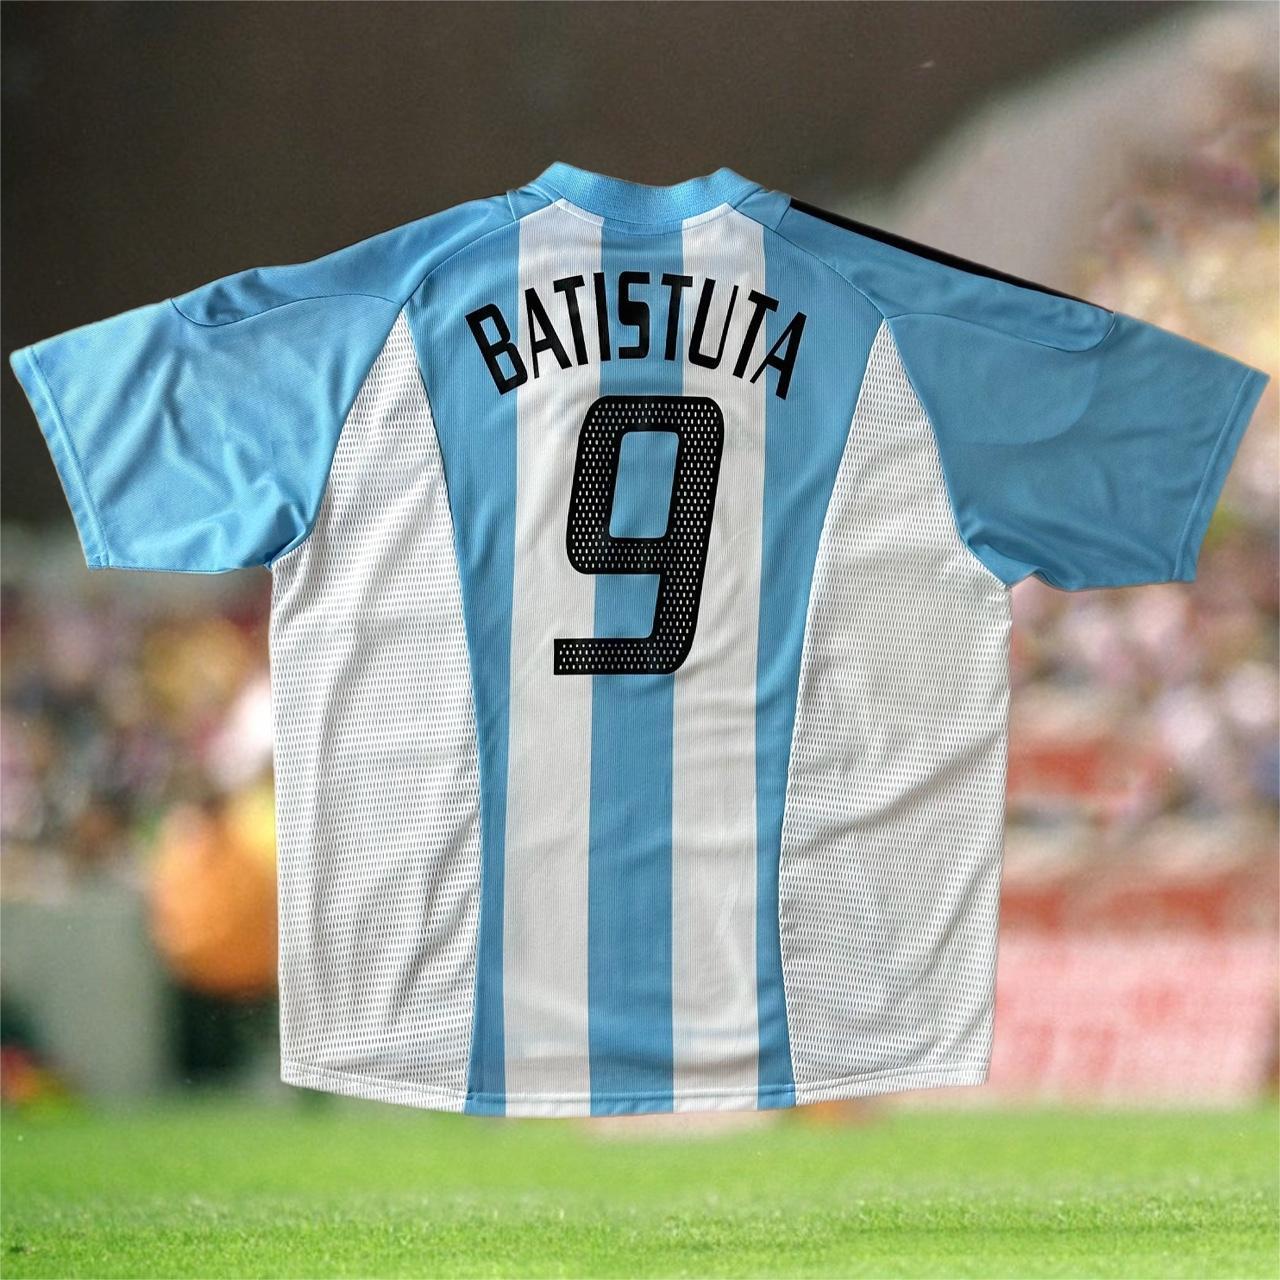 jersey argentina batistuta